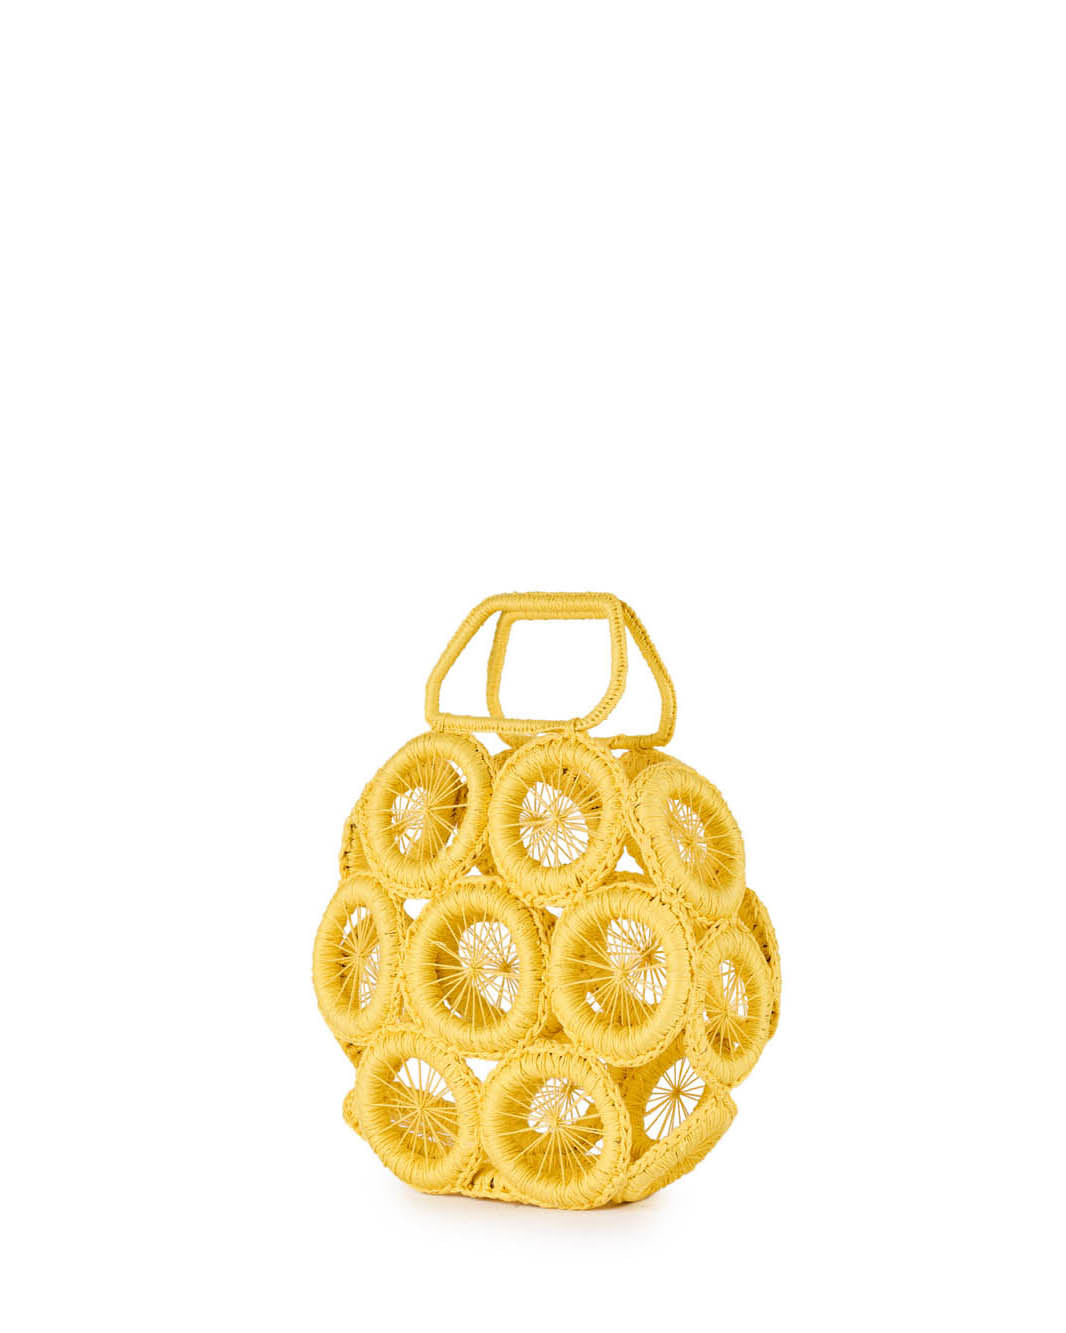 Yellow wicker handbag with circular woven design and handles